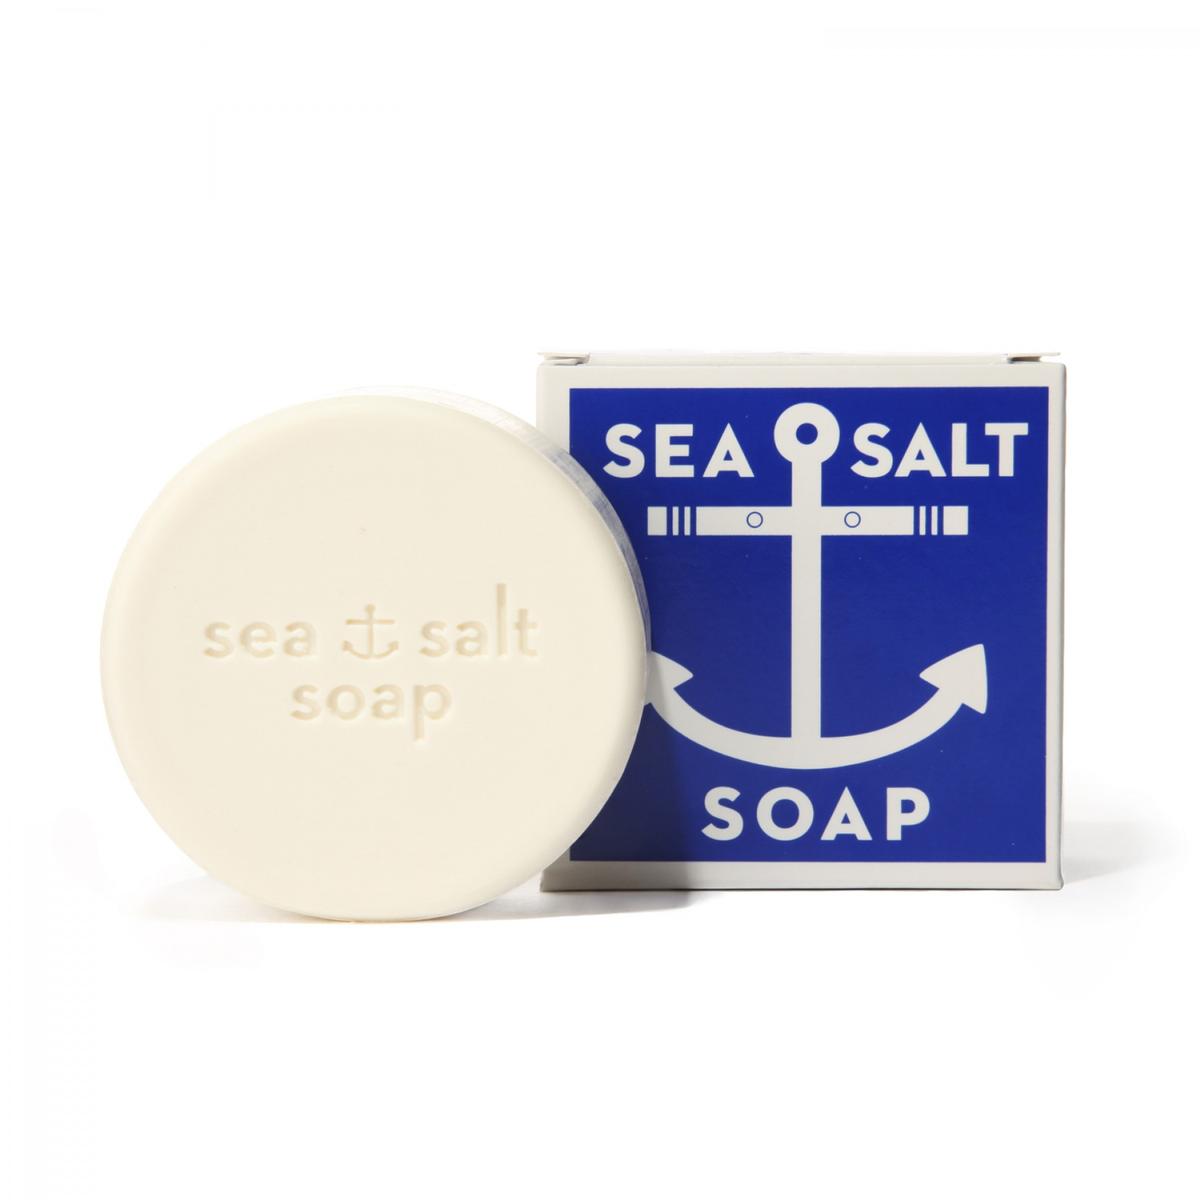 Primary image of Travel Sea Salt Soap